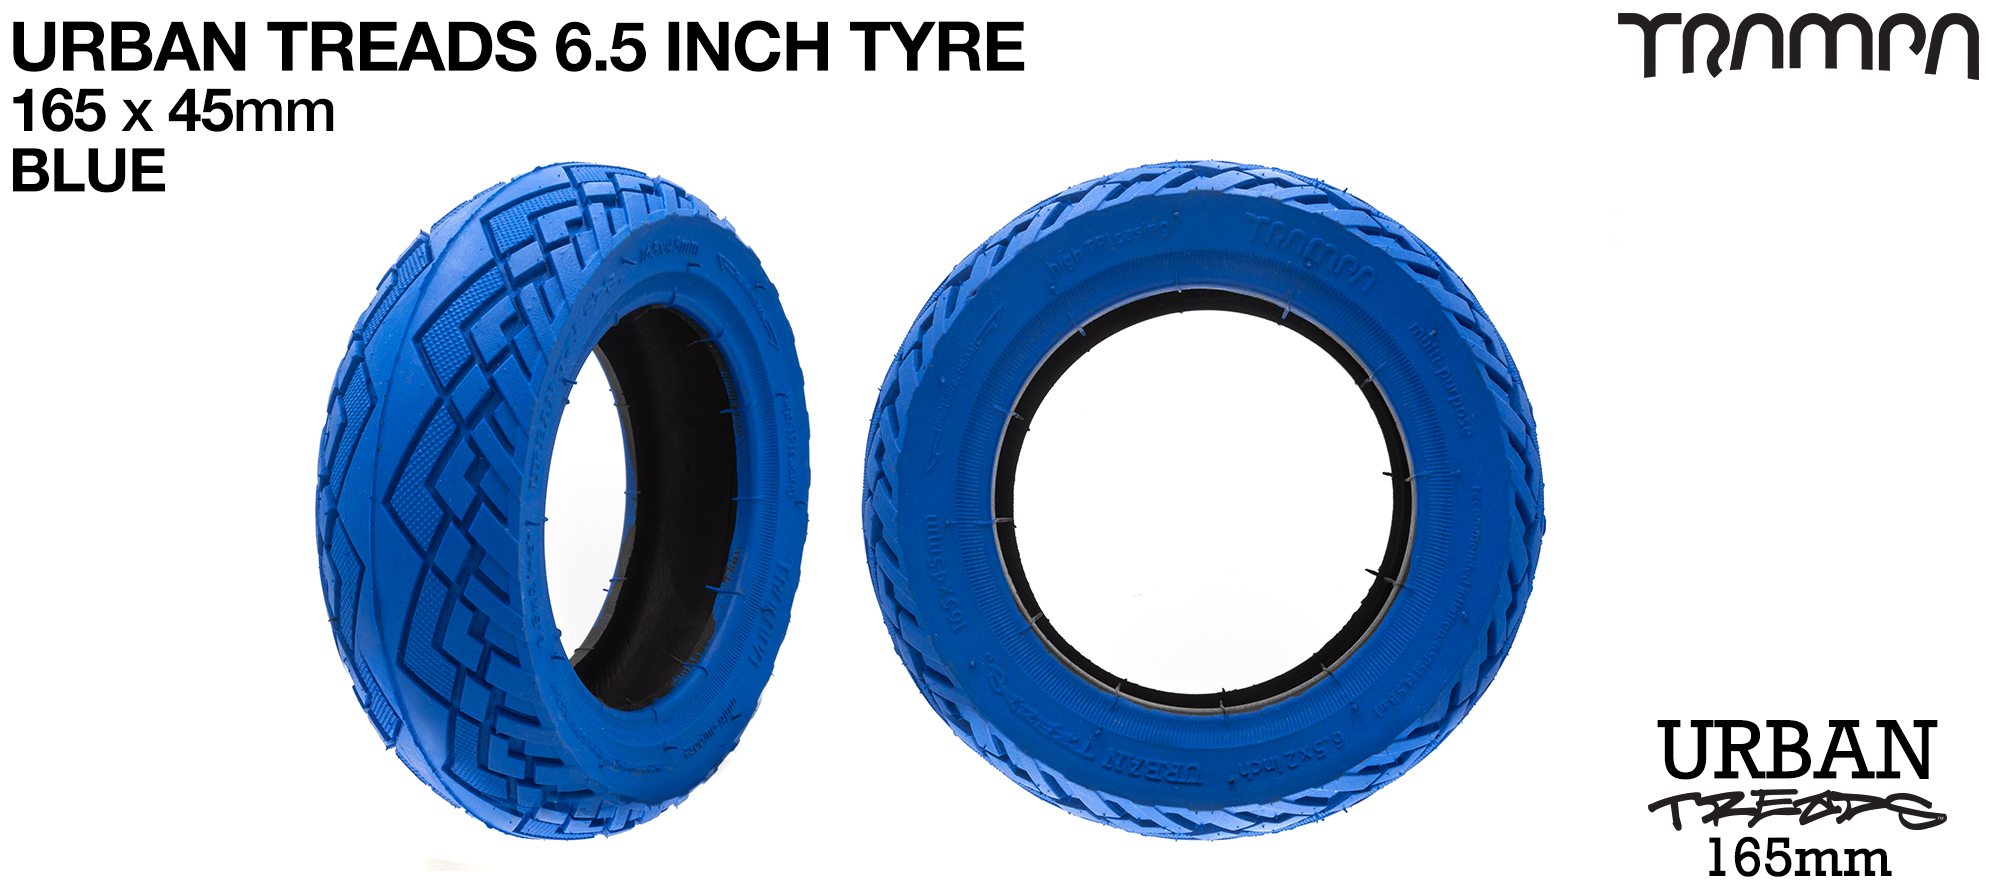 6 Inch TRAMPA URBAN TREADS Tyre & Tube - BLUE